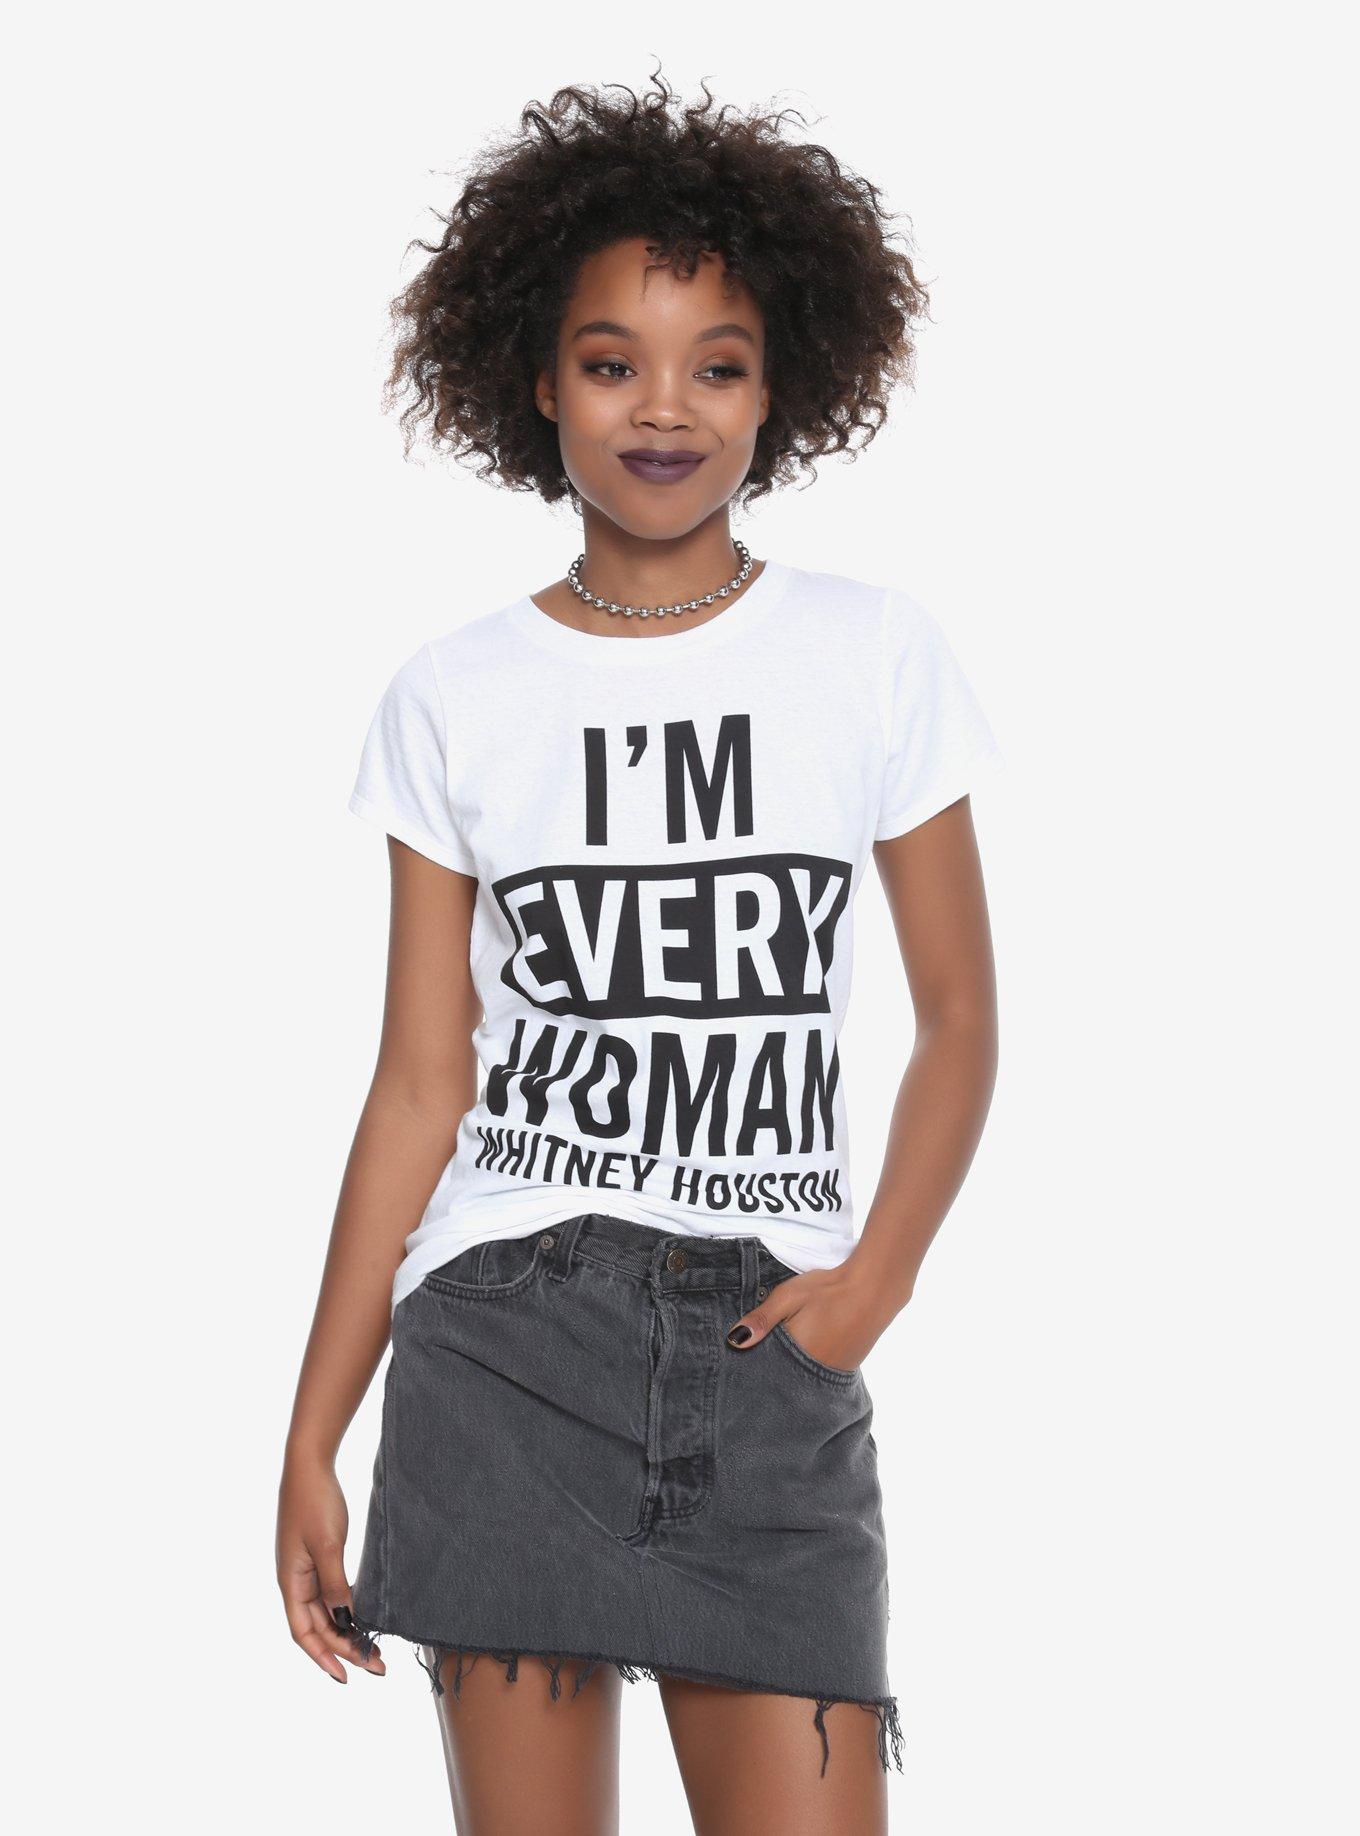 Whitney Houston I'm Every Woman Girls T-Shirt Hot Topic